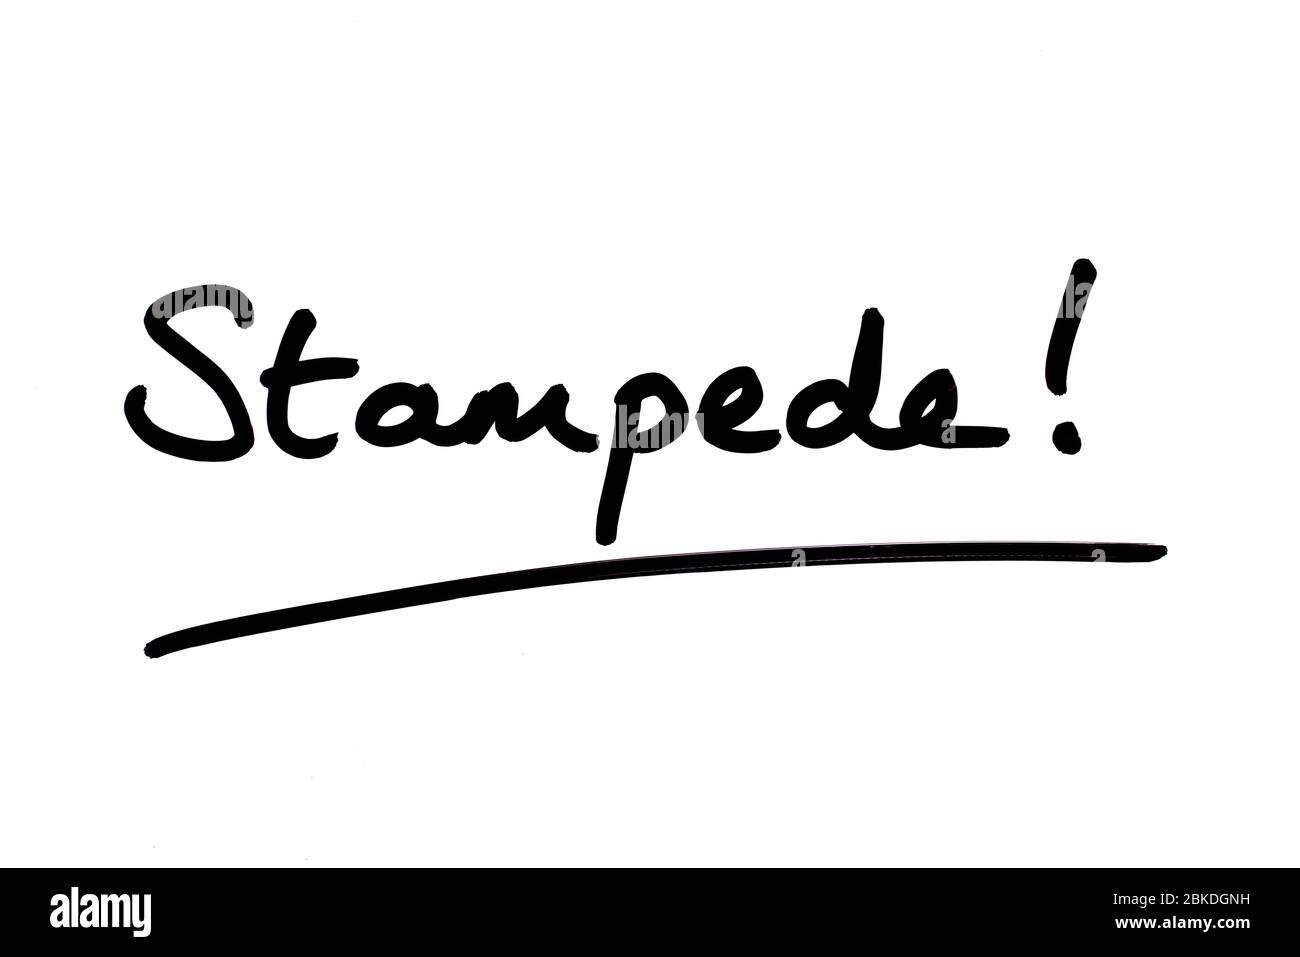 Stampede! handwritten on a white background. Stock Photo